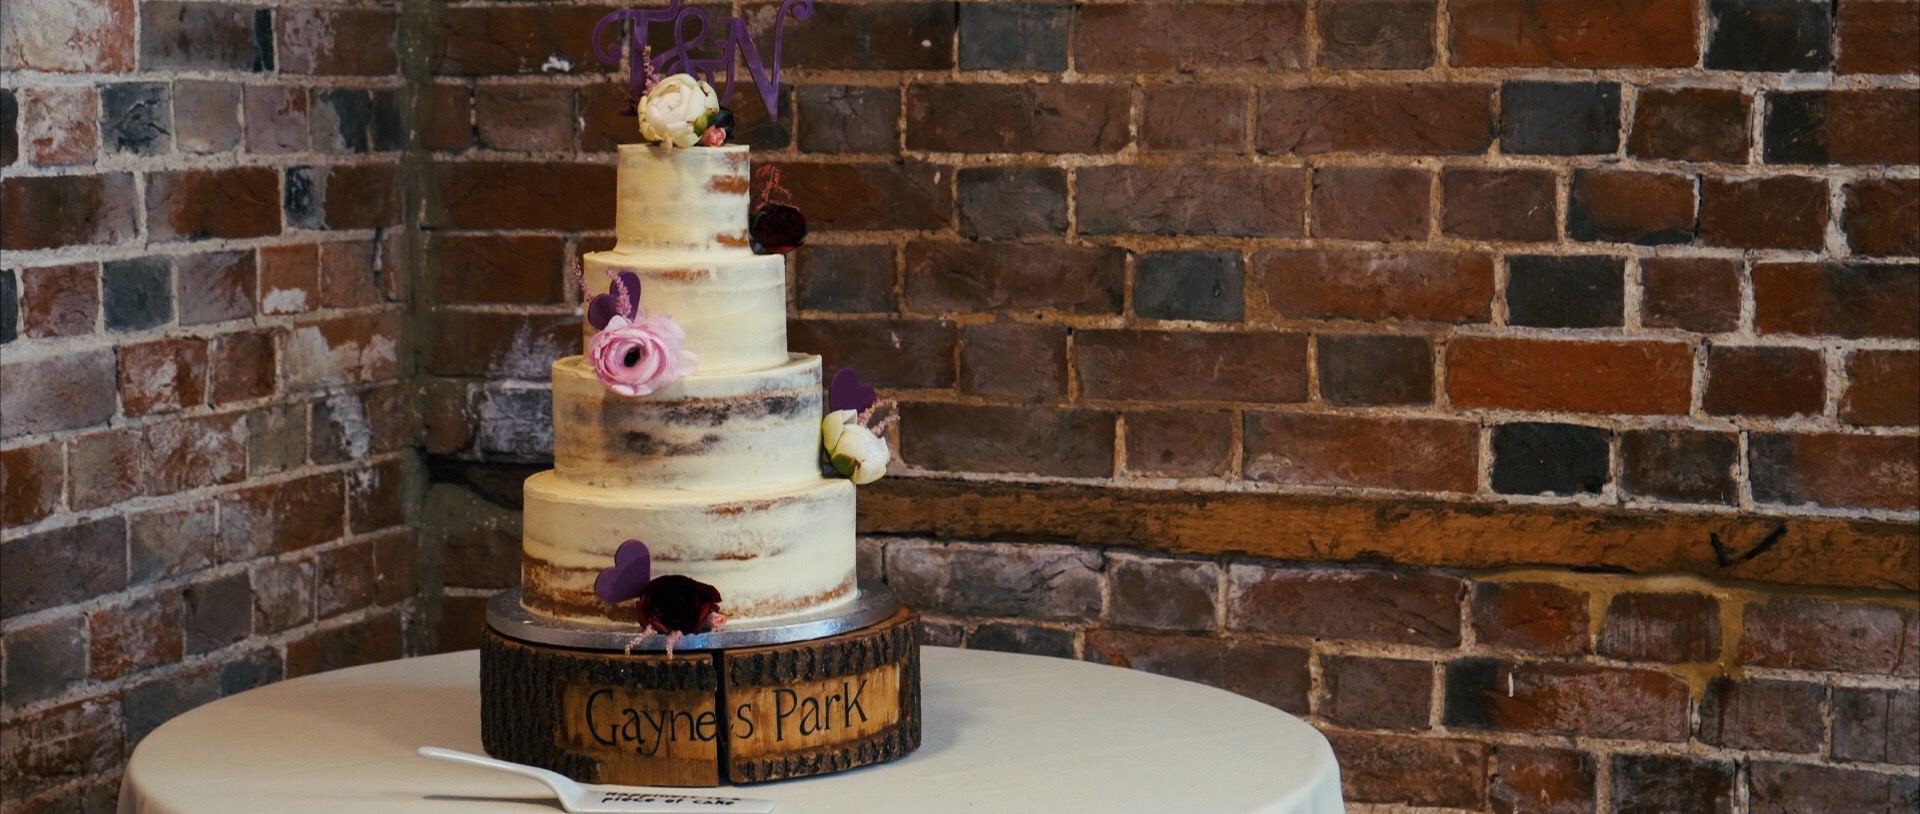 Gaynes Park natural wedding cake video.jpg